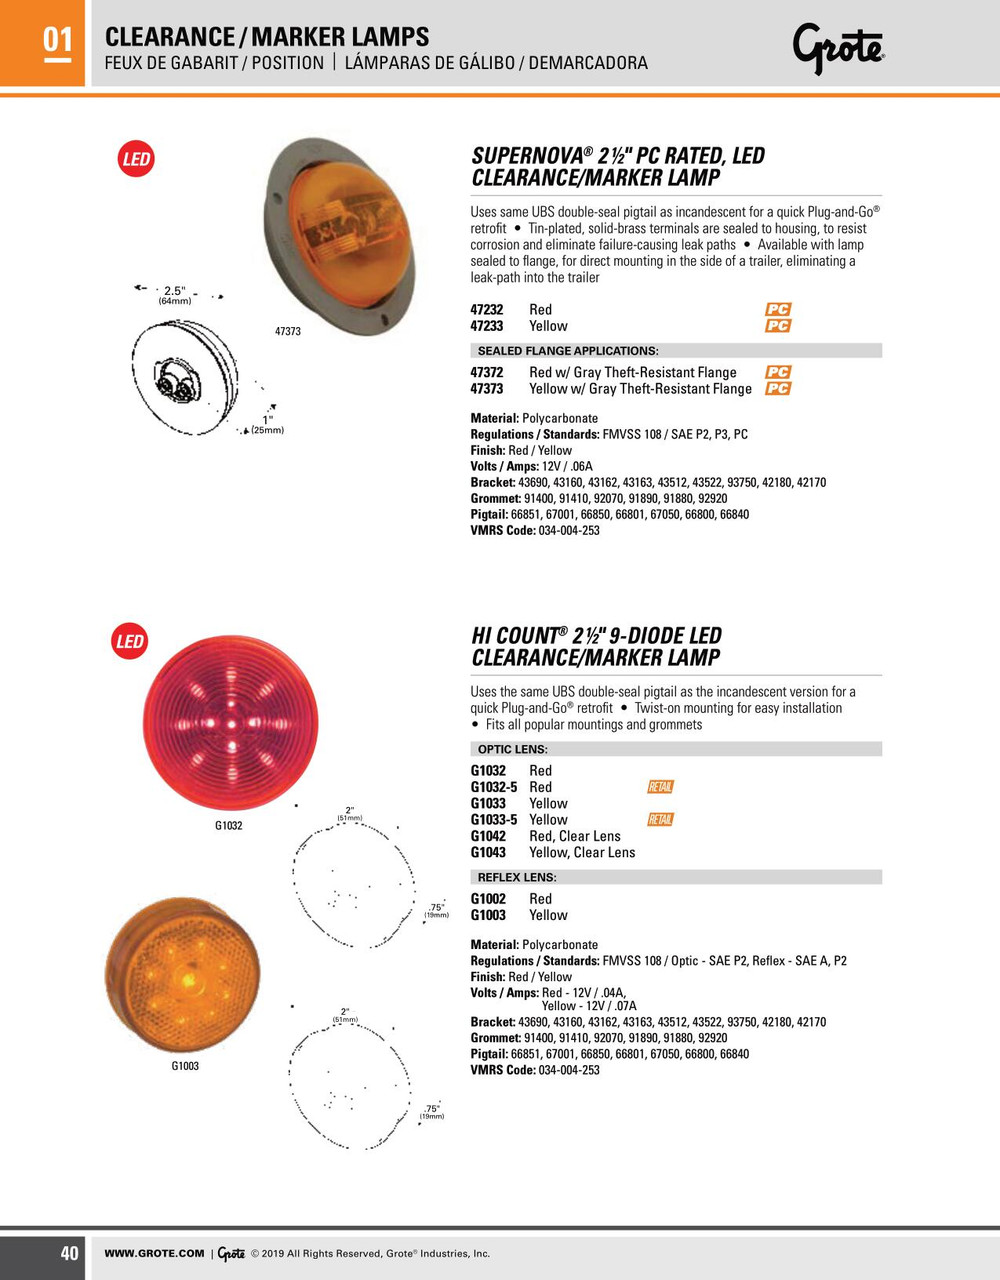 2-1/2" SuperNova® LED Clearance/Marker Lamp - Red  47232